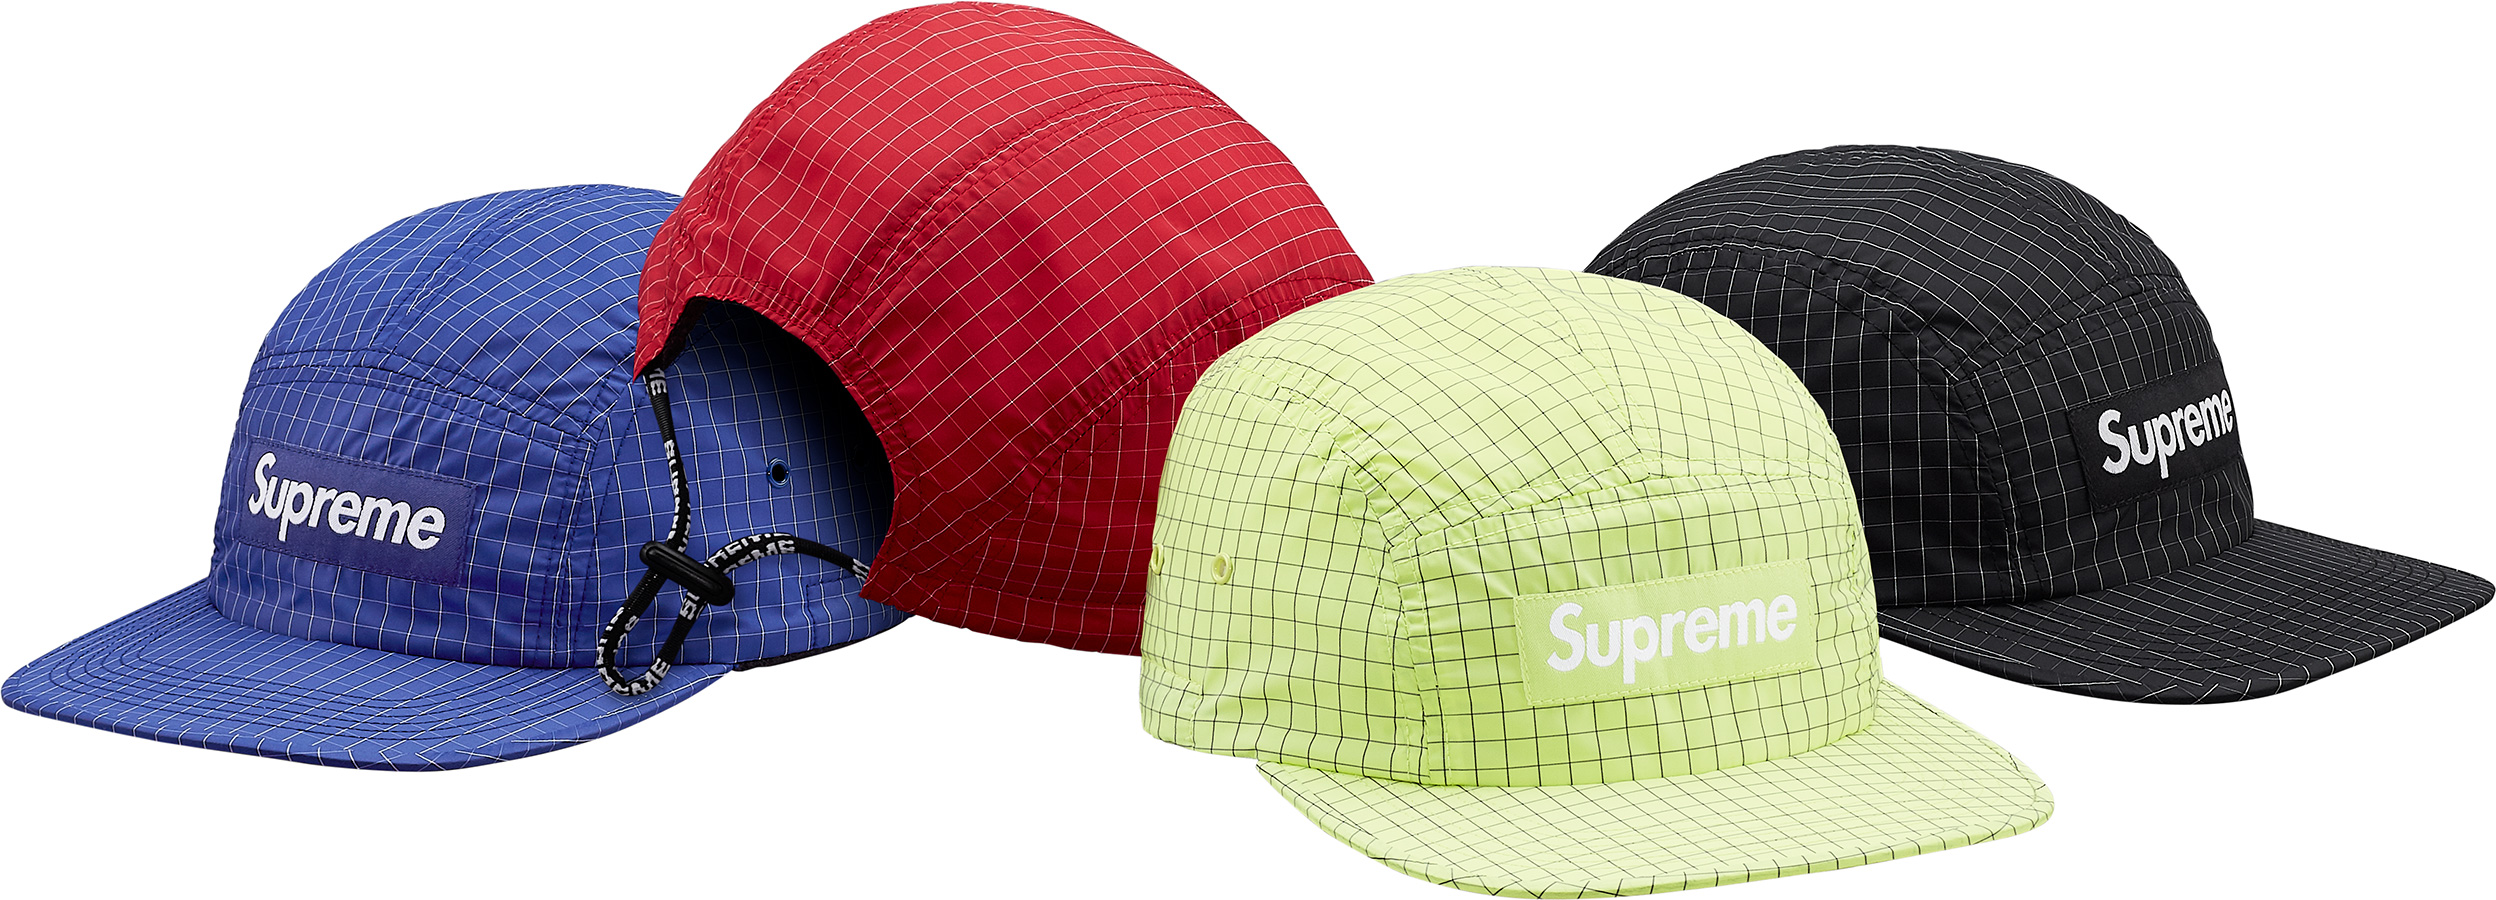 supreme contrast ripstop camp cap